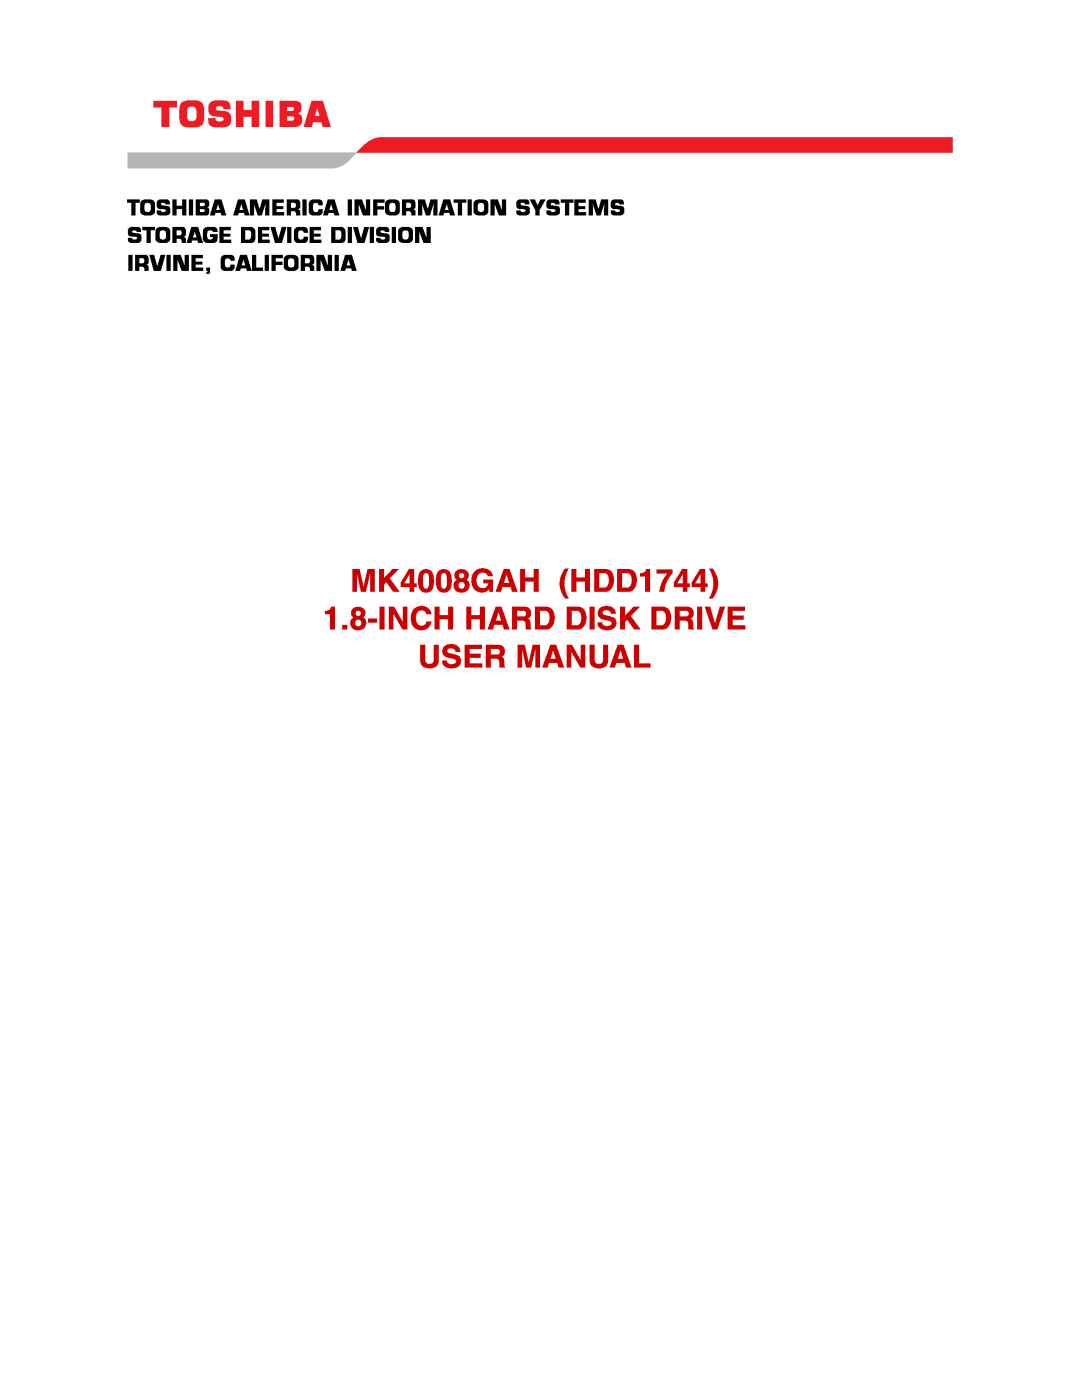 Toshiba MK4008GAH user manual Toshiba America Information Systems Storage Device Division, Irvine, California 